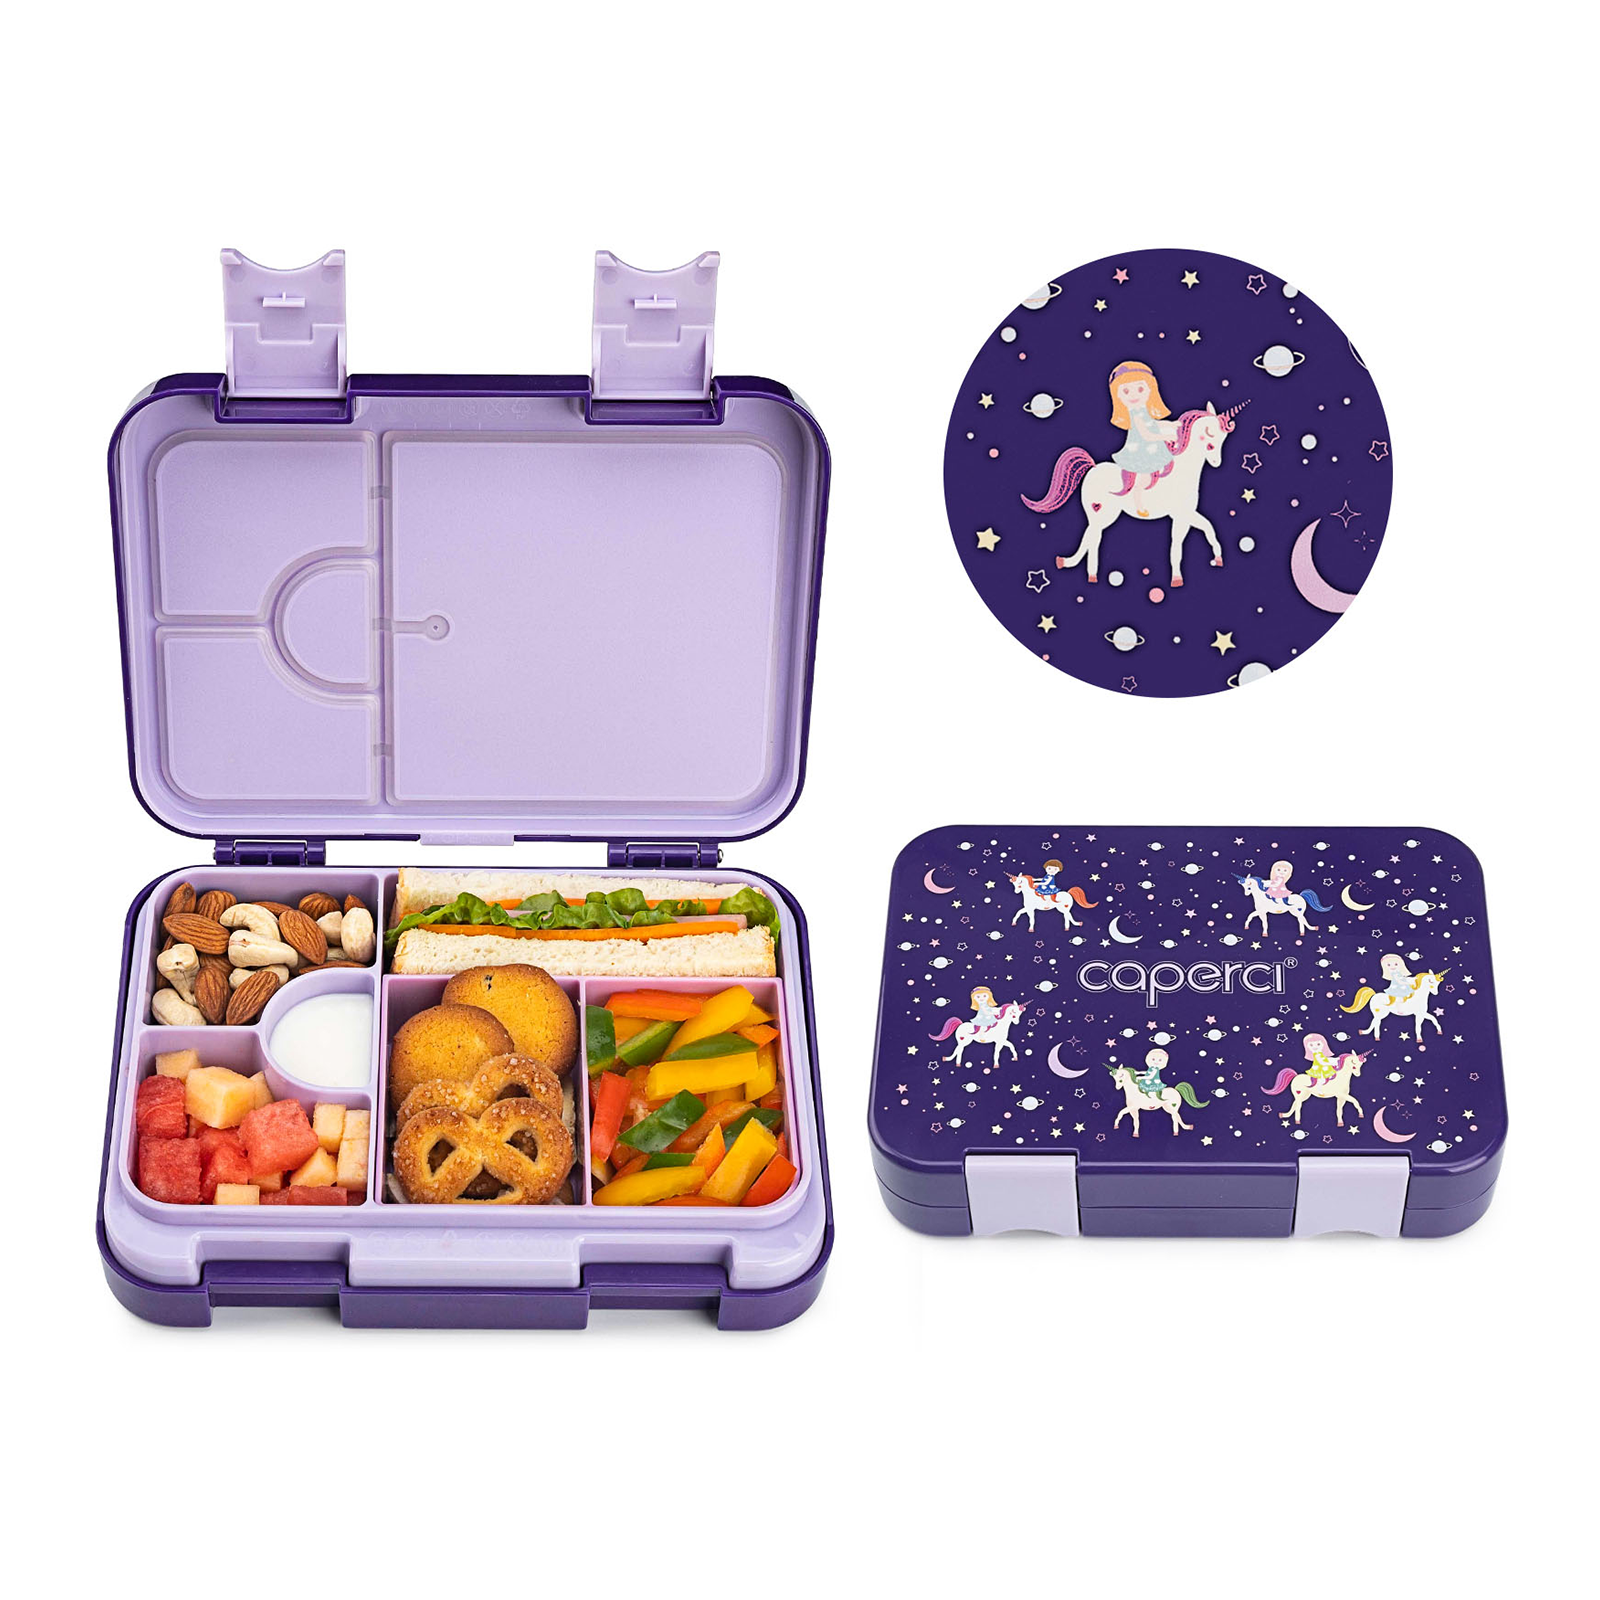 Caperci Dinosaur Bento Lunch Box for Kids - Unicorn